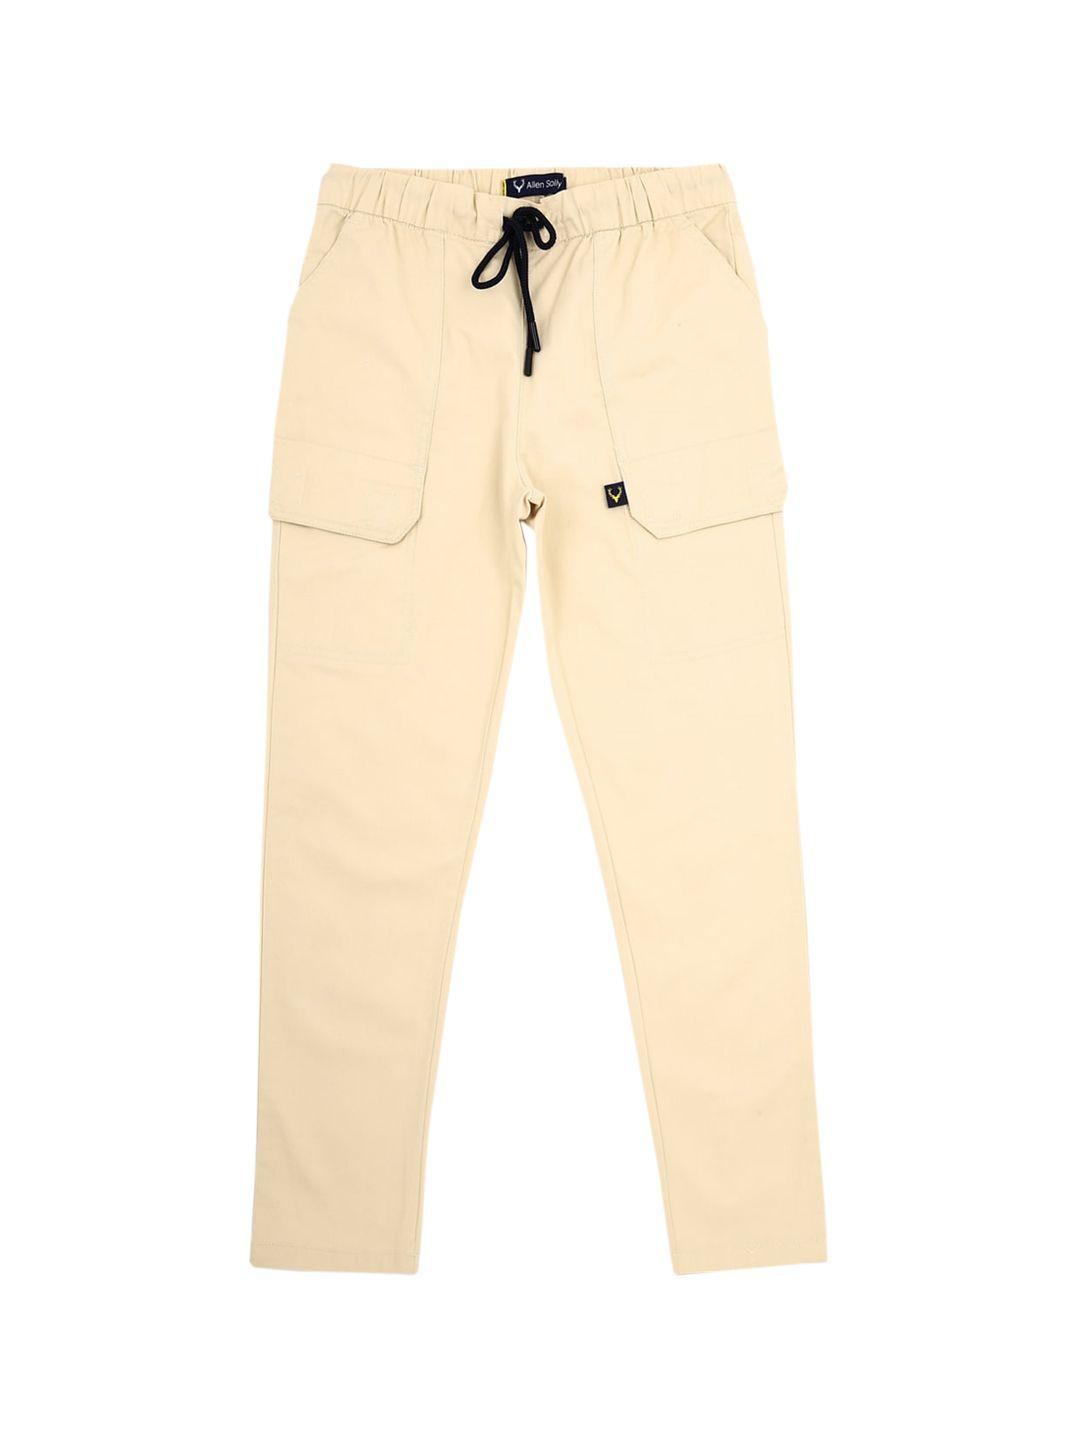 allen solly junior boys cream-coloured joggers trousers